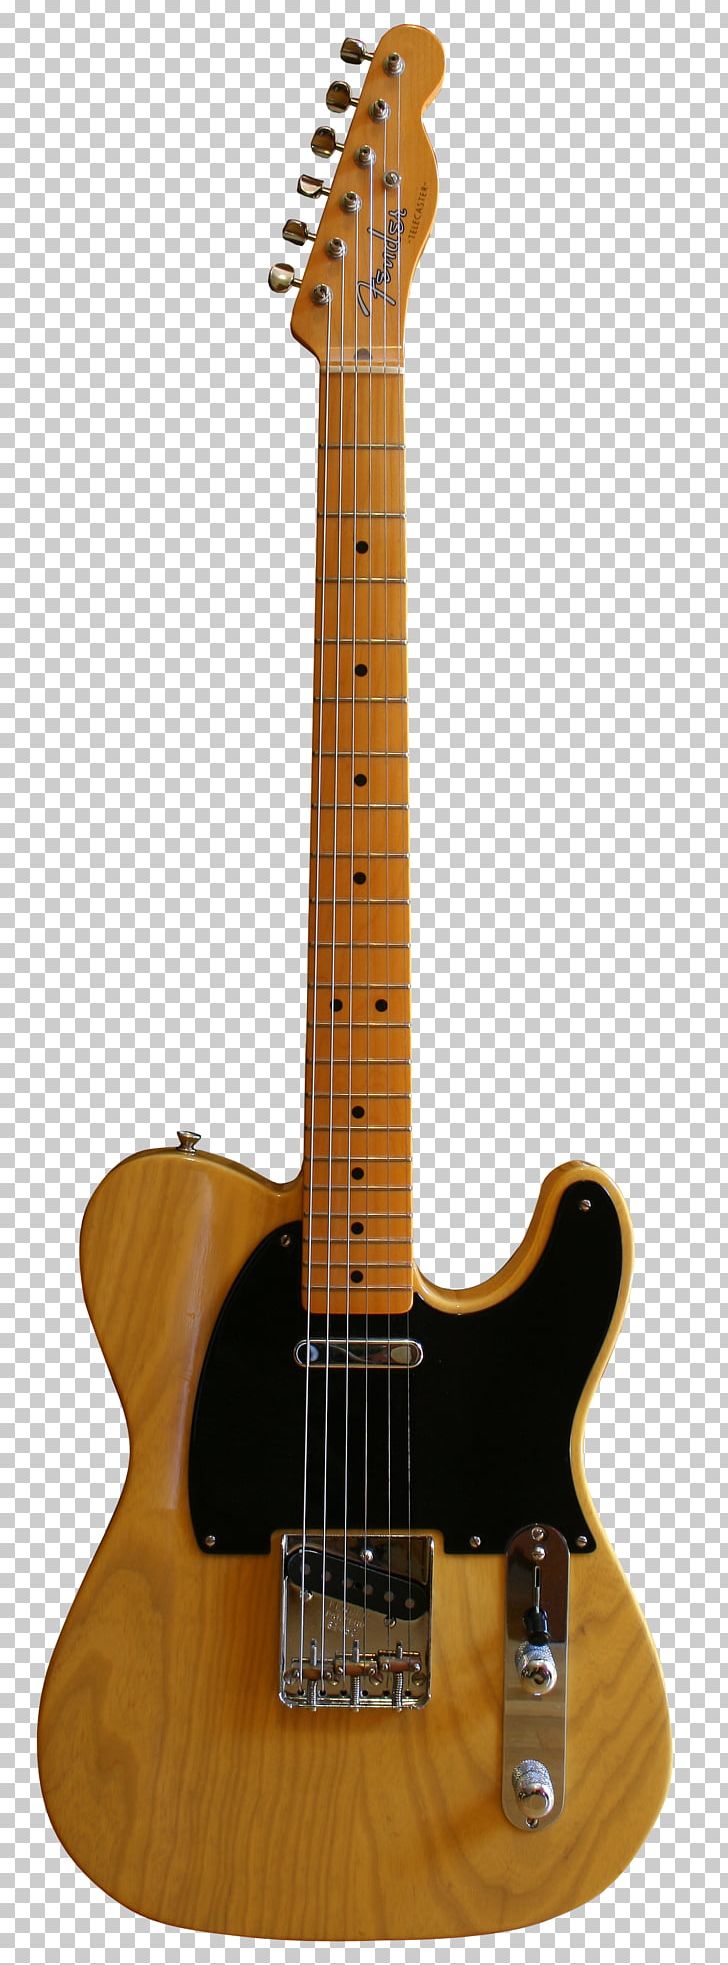 Fender Stratocaster Resonator Guitar Fender Telecaster Electric Guitar Musical Instruments PNG, Clipart, Acoustic Electric Guitar, Acoustic Guitar, Bass Guitar, Dean Guitars, Guitar Accessory Free PNG Download